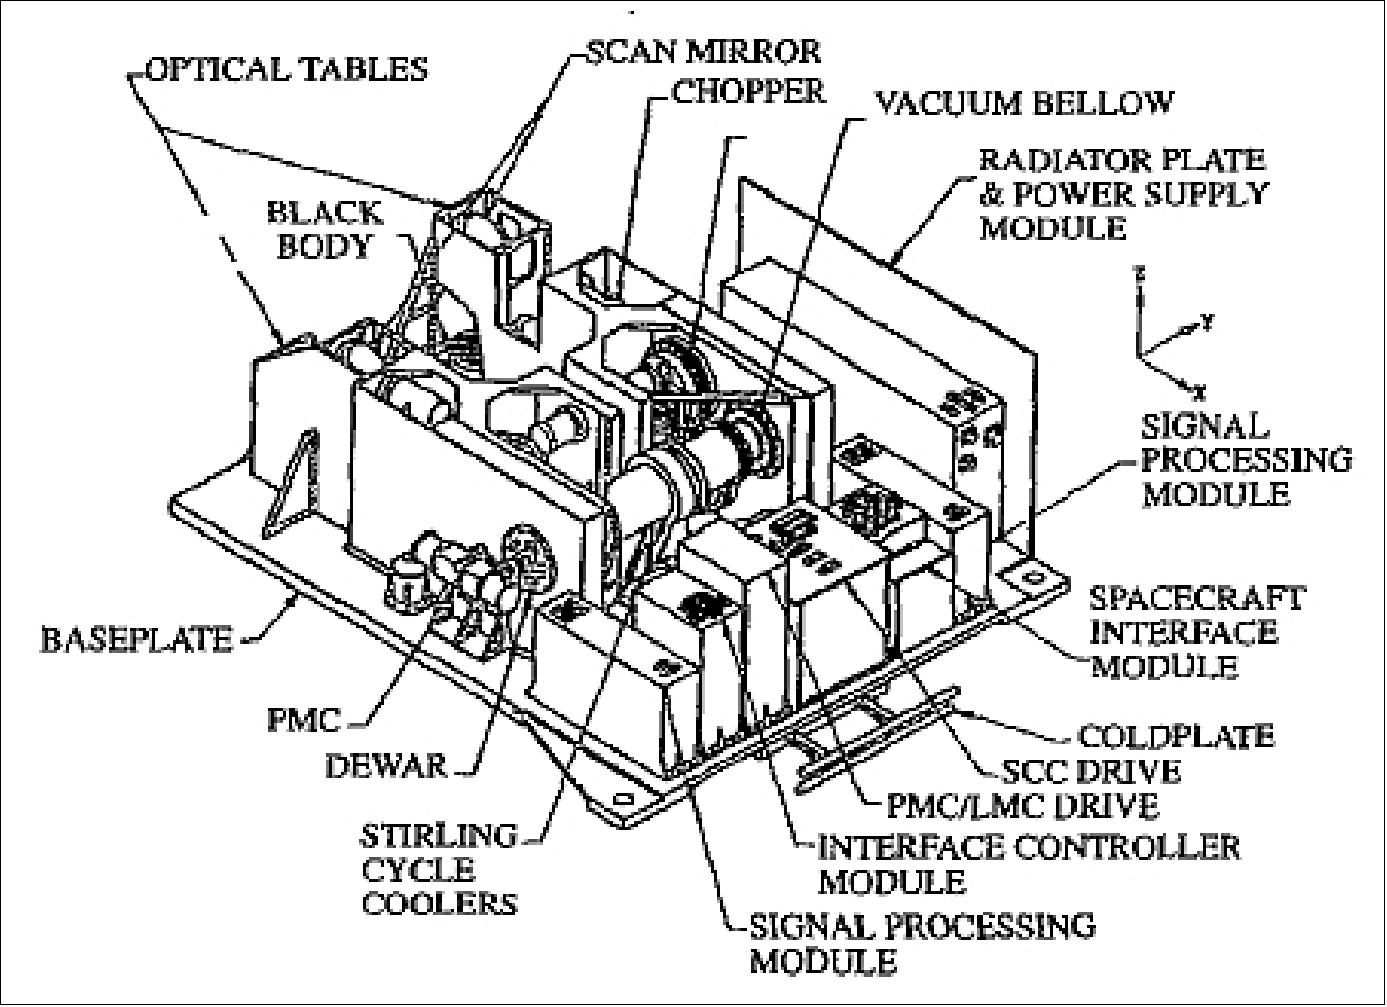 Figure 75: Isometric optical system layout of the MOPITT instrument (image credit: University of Toronto)